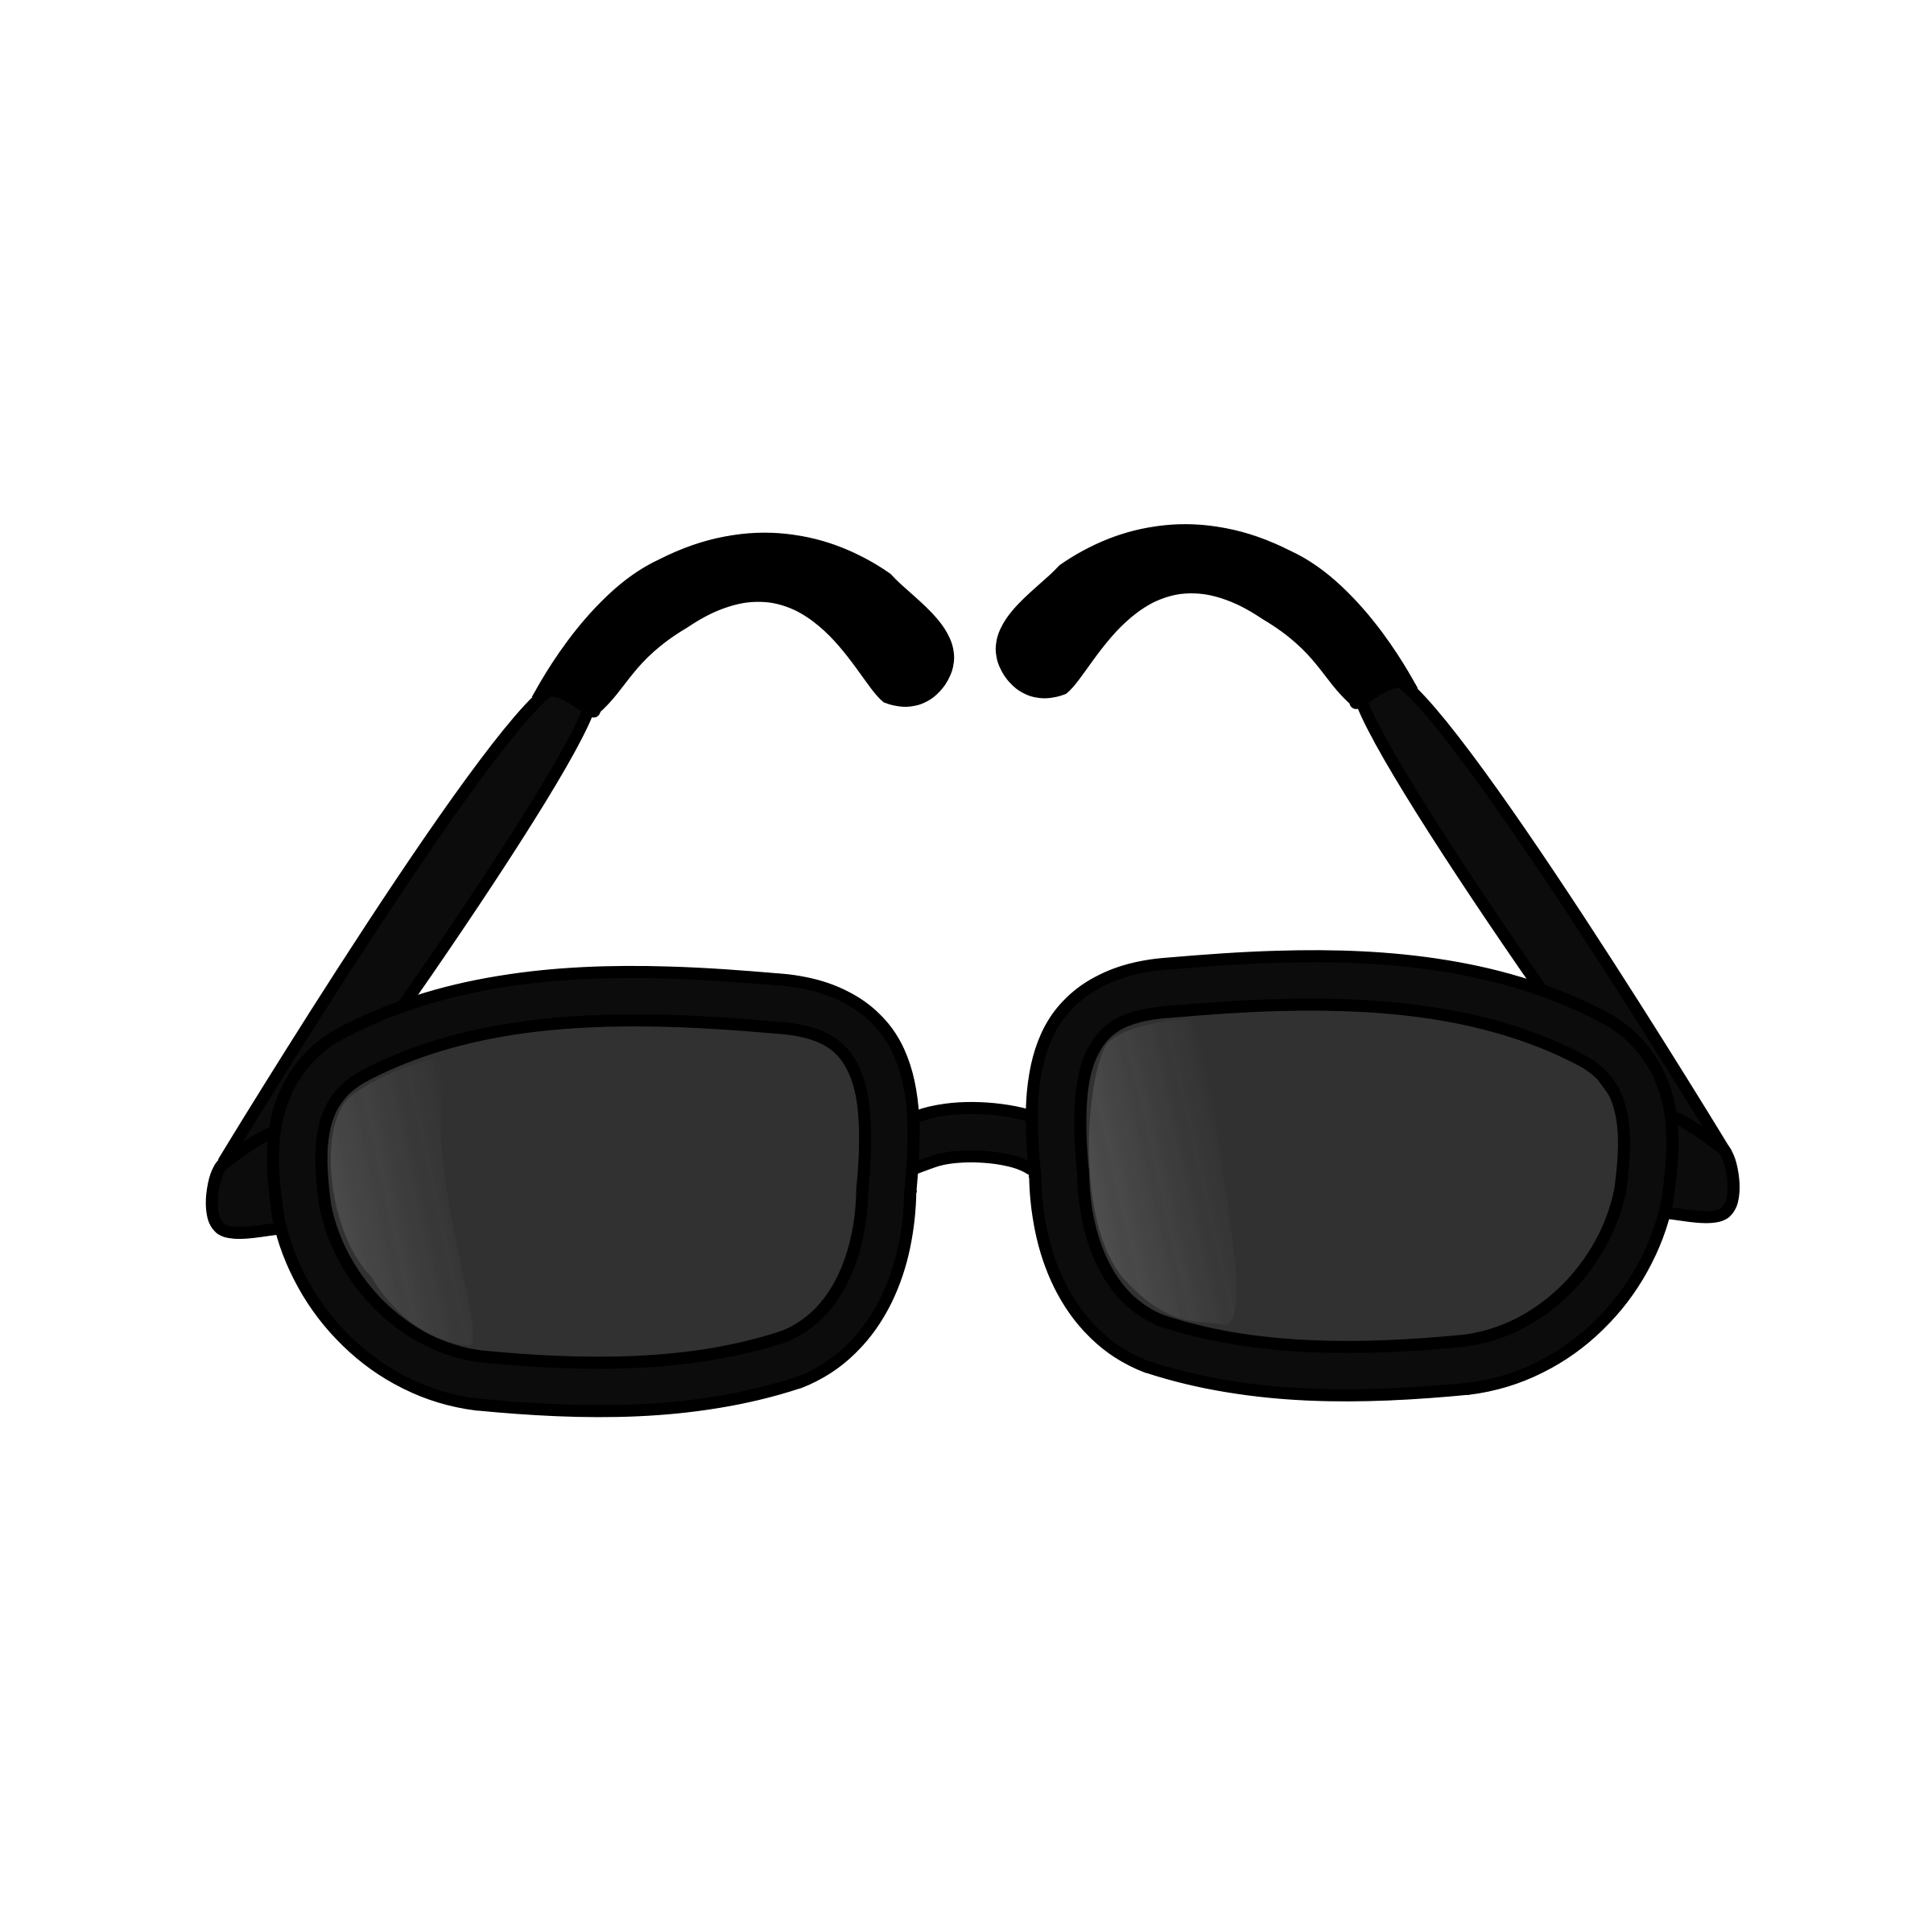 Free Sunglasses Clip Art Black And White, Download Free Sunglasses Clip ...